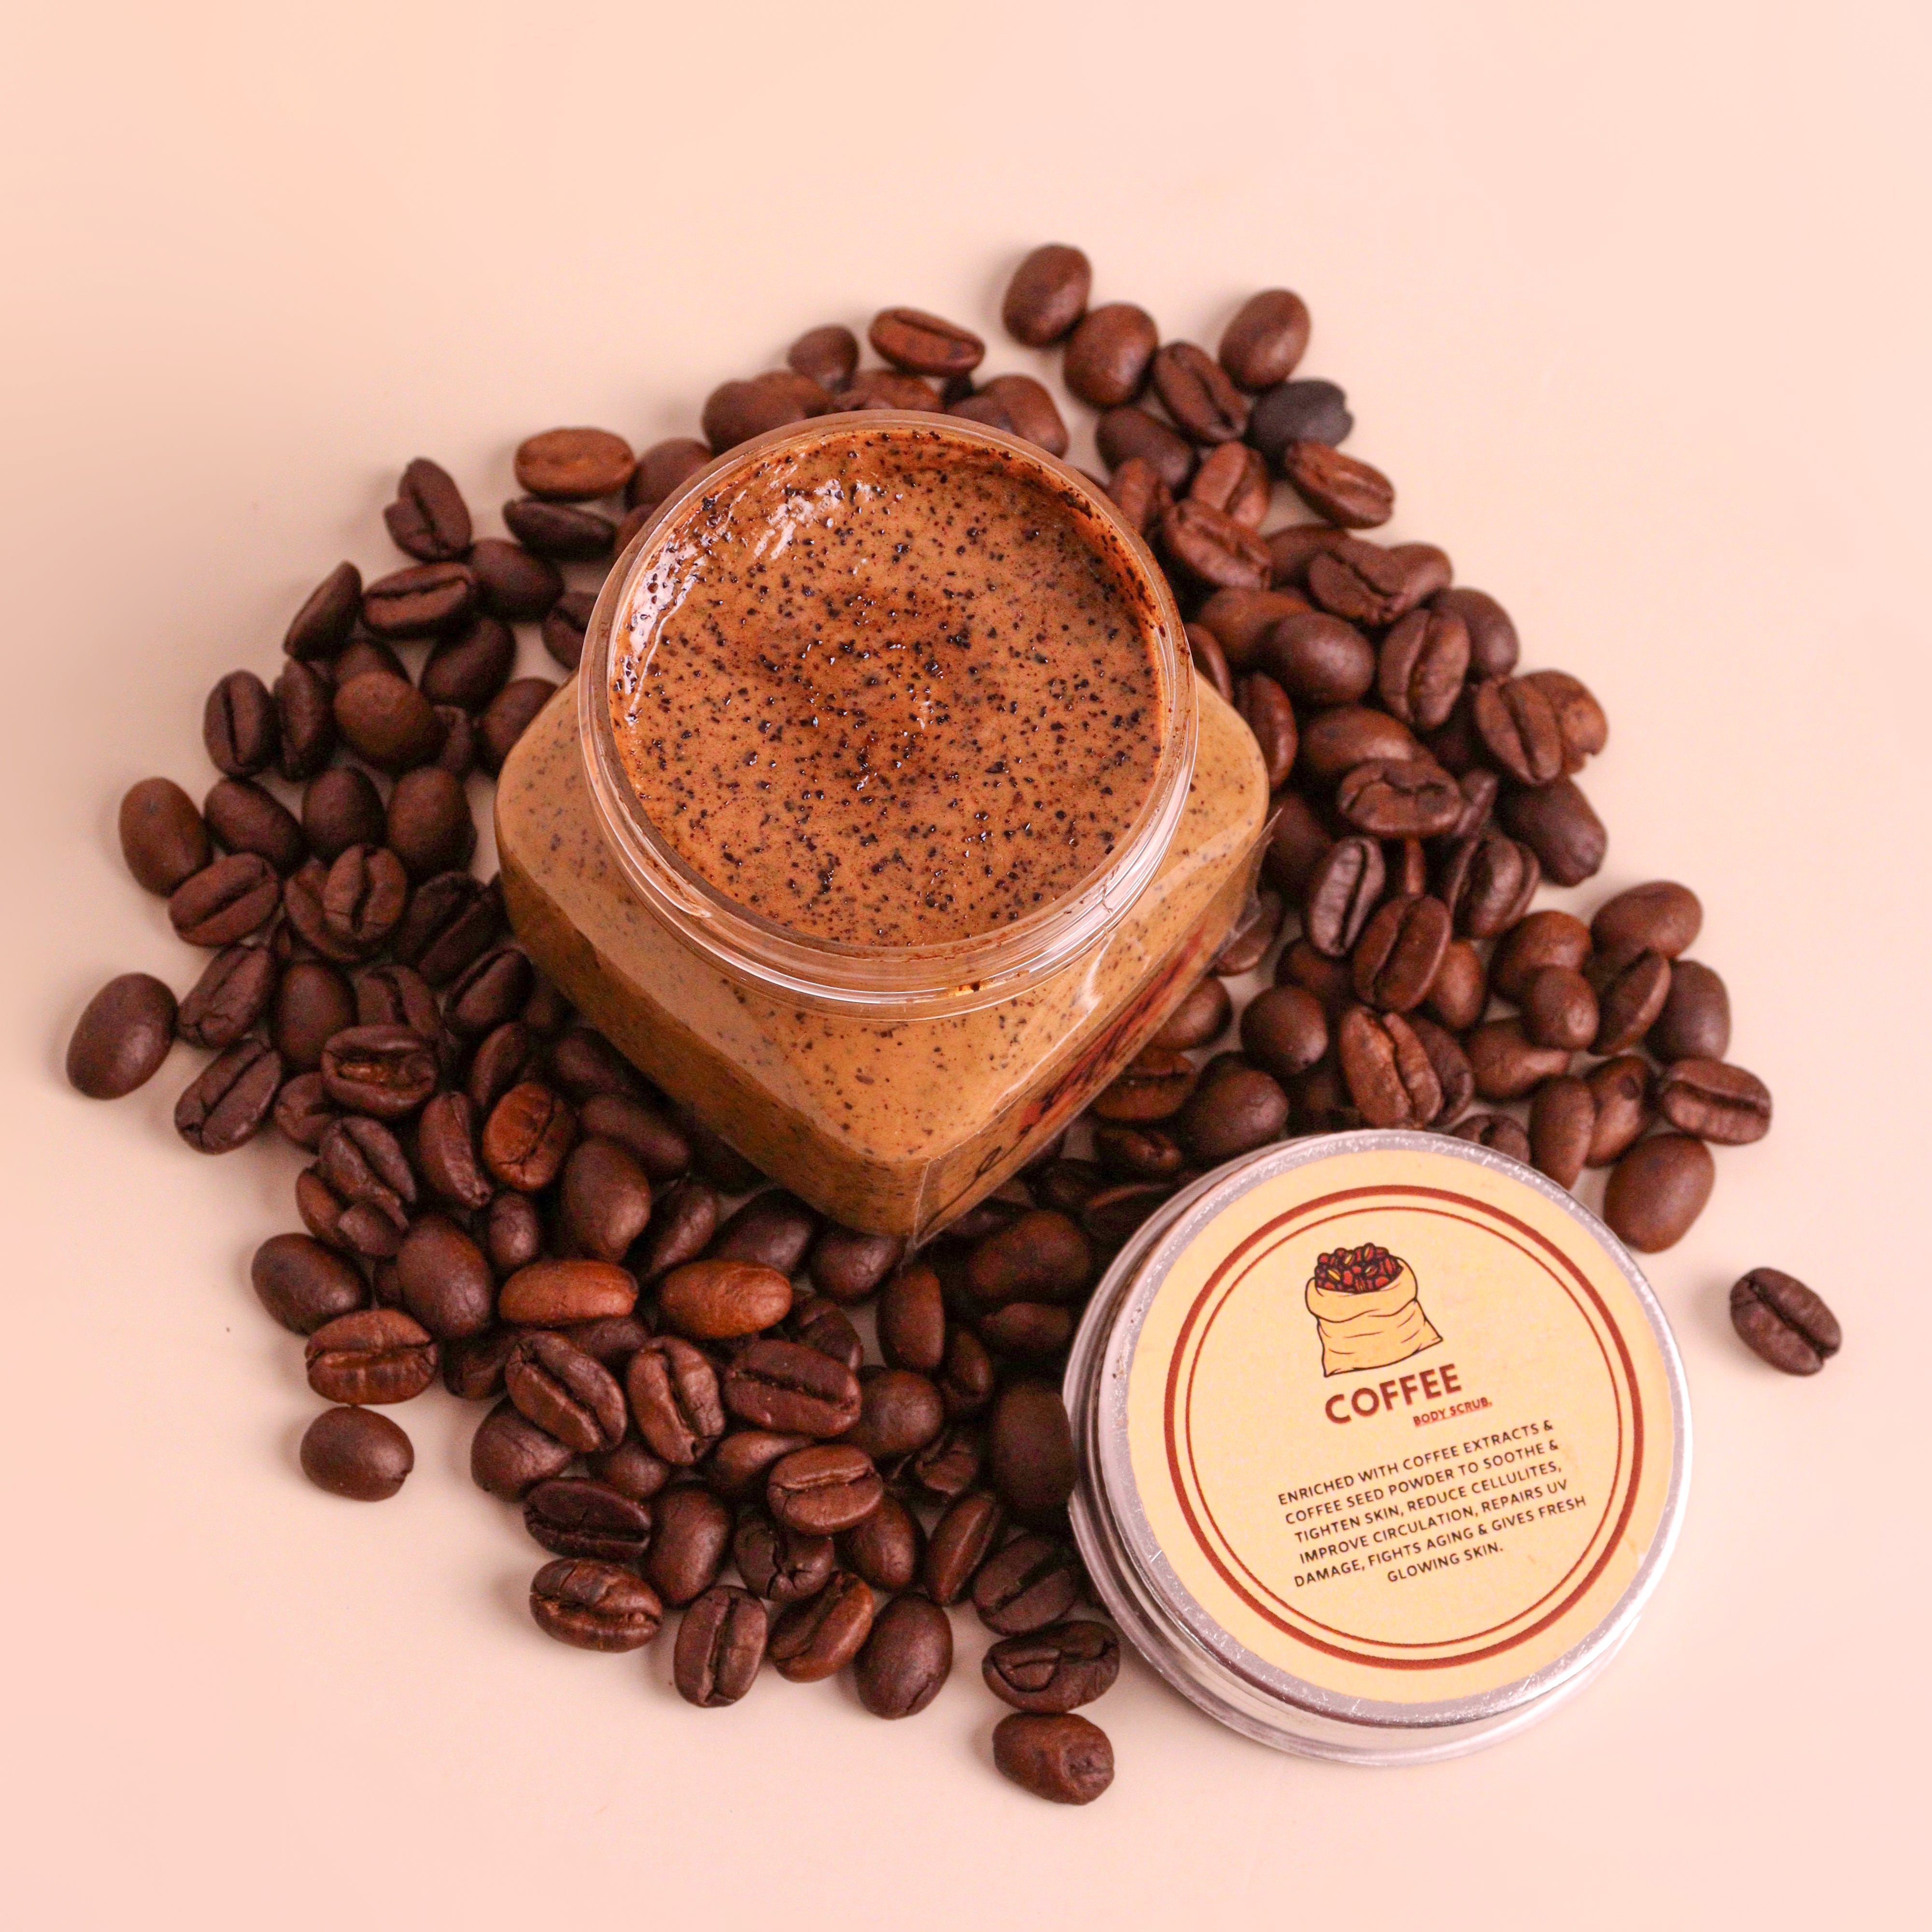 Chocolate-Coffee body care combo